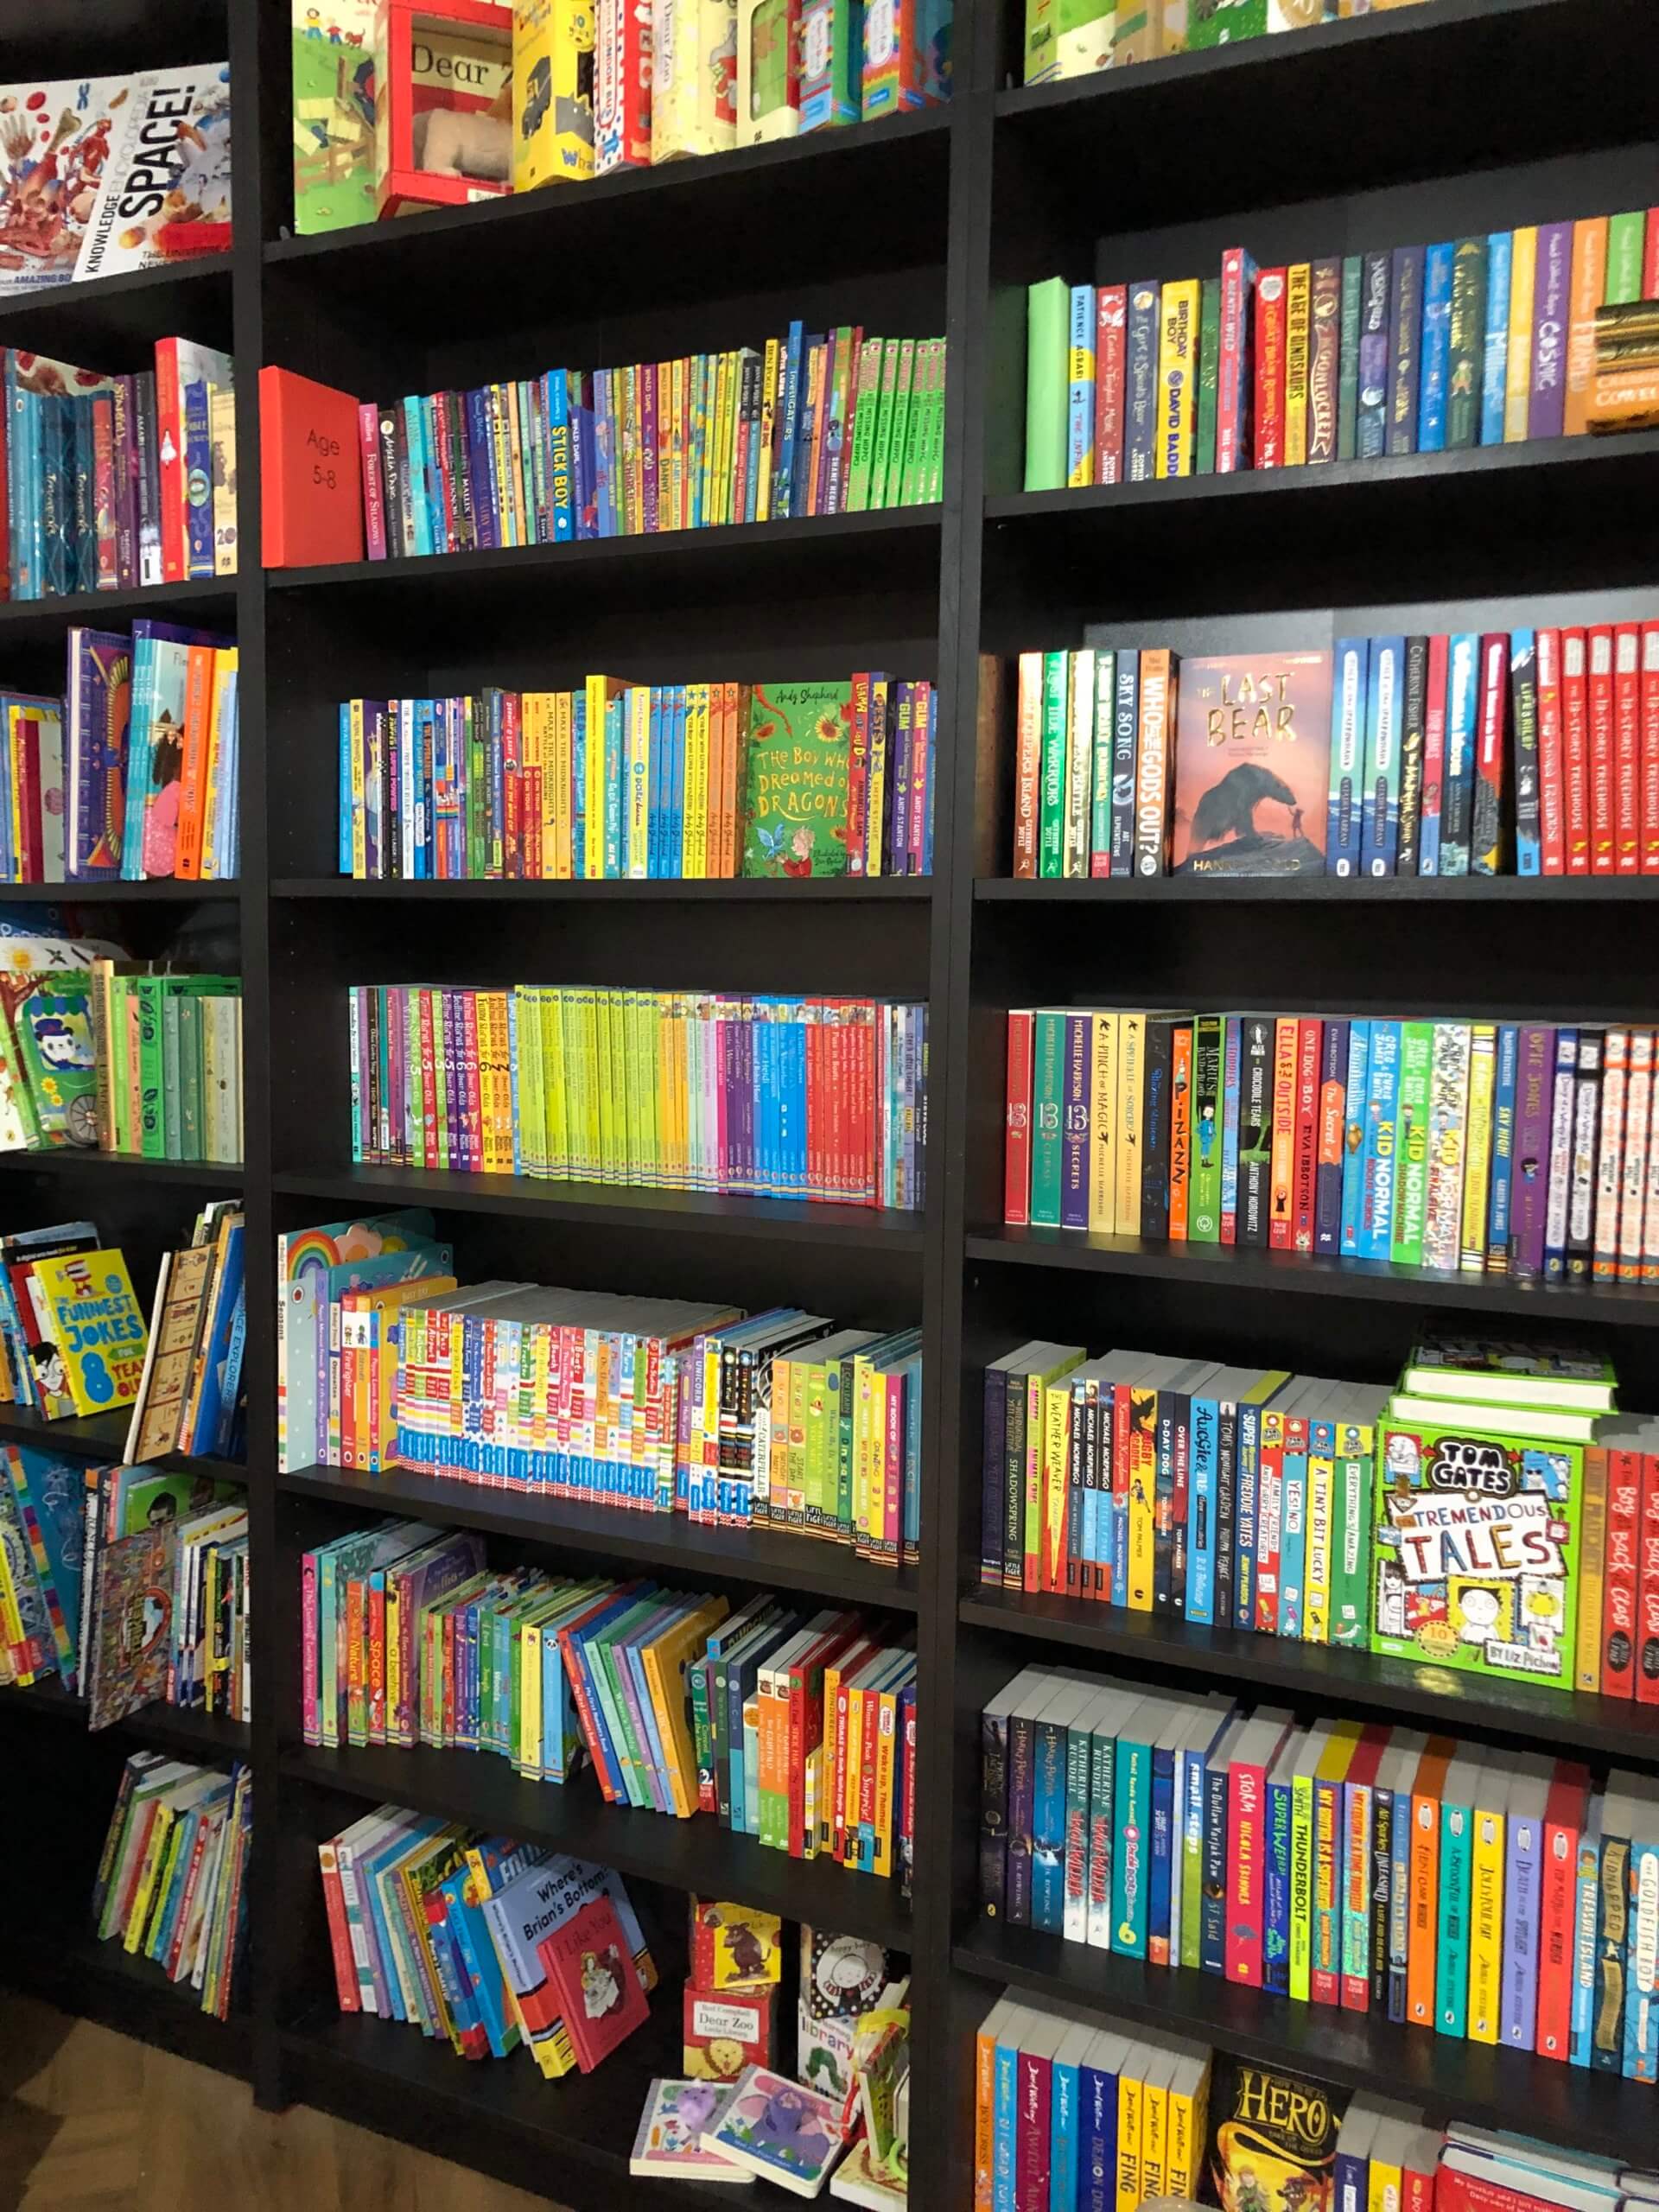 A colourful shelf full of children's books